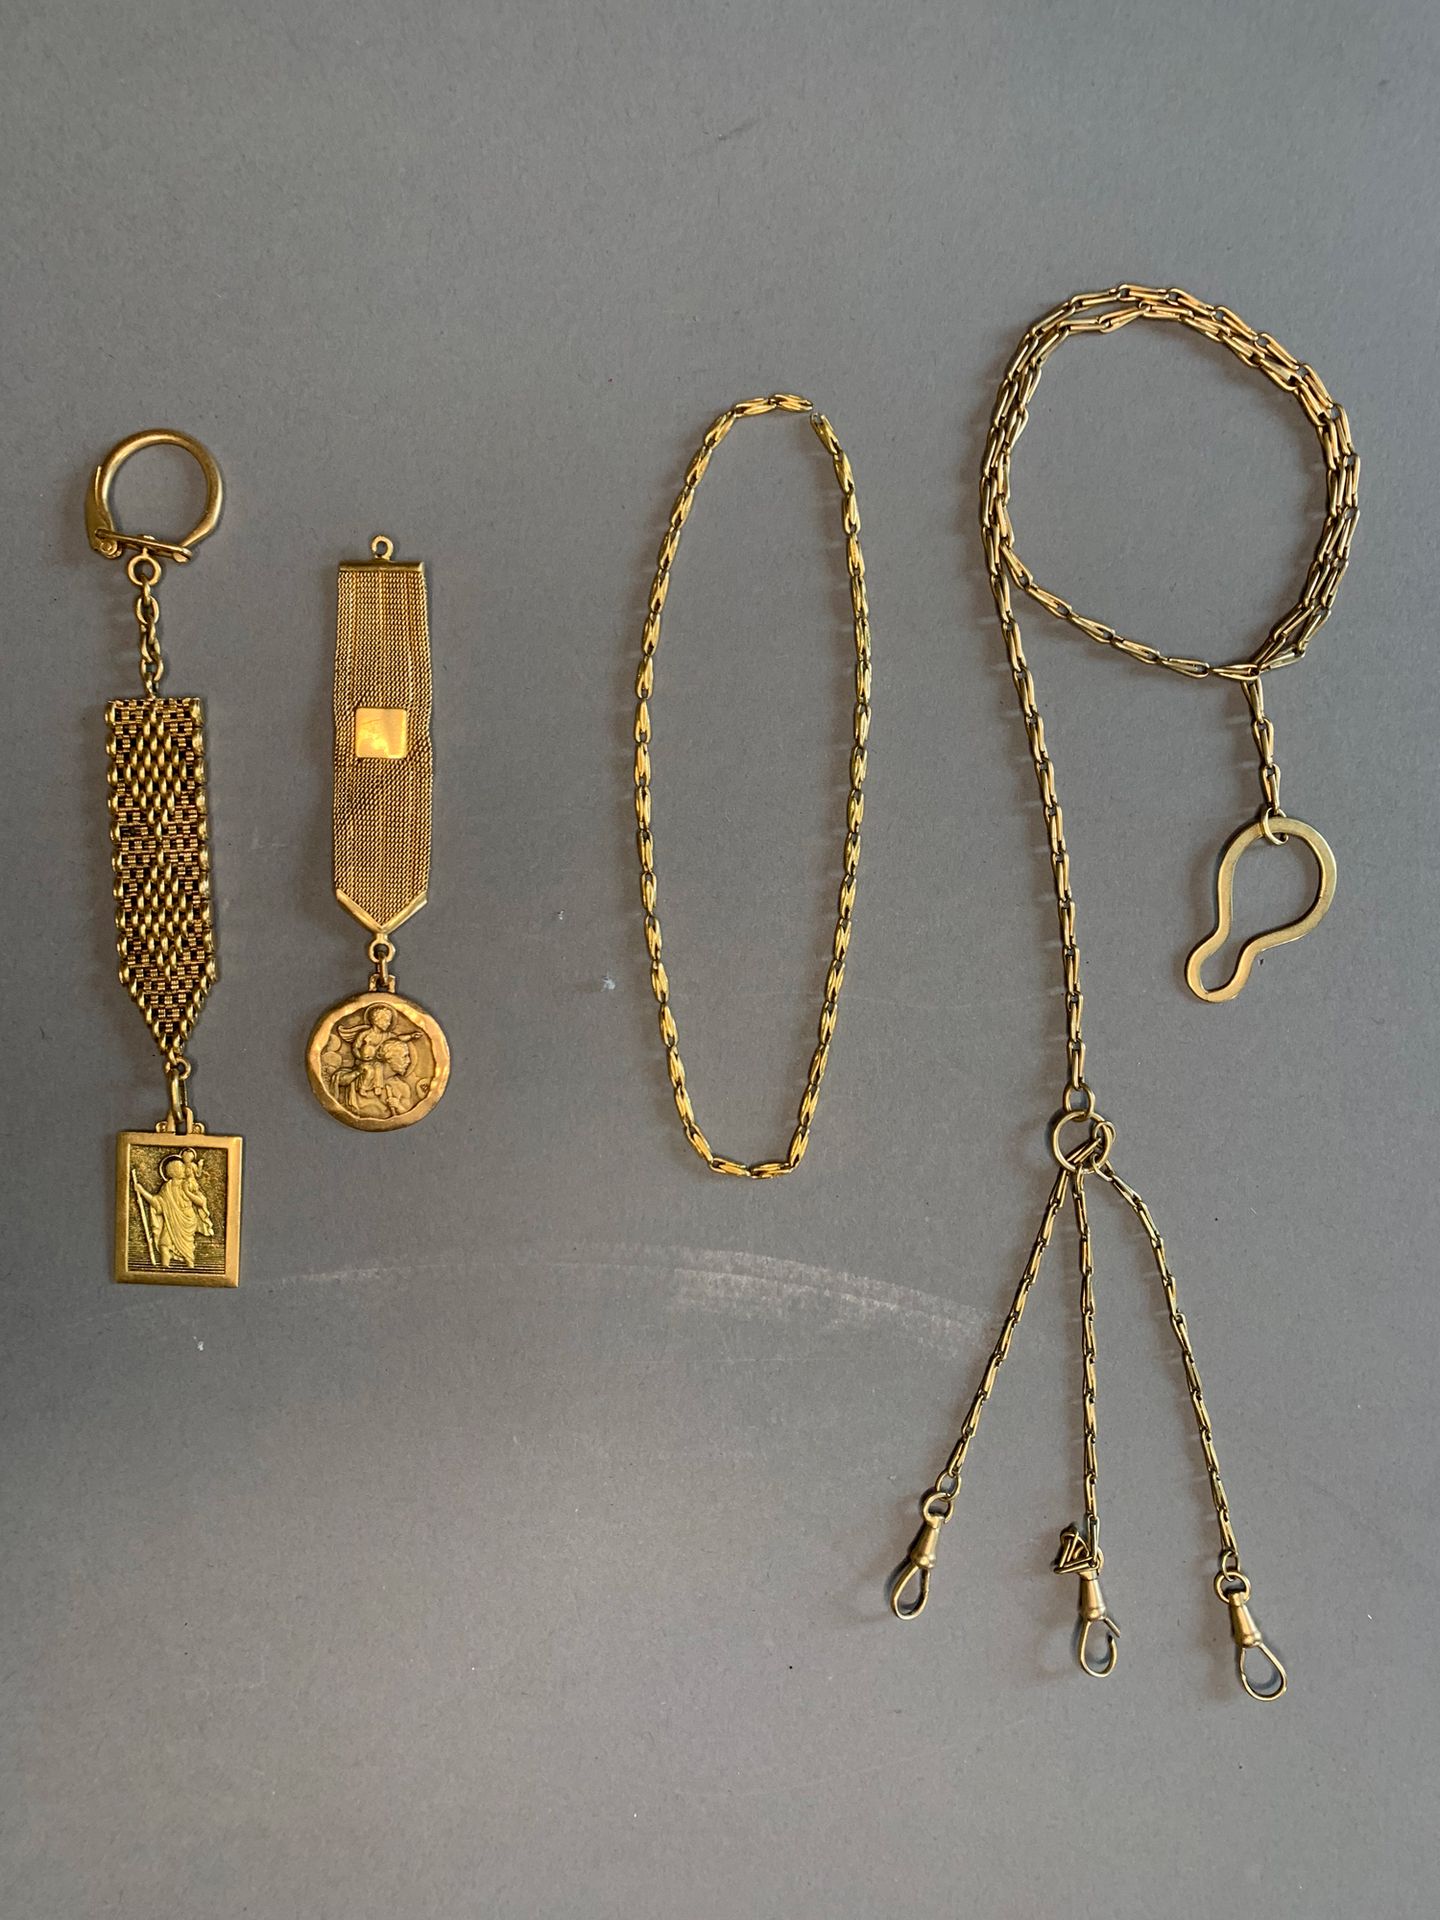 Null 黄金拍品。
它包括两个带有圣克里斯托弗勋章的钥匙圈，一个古董表链和一个链条碎片。
总重量：76,2克